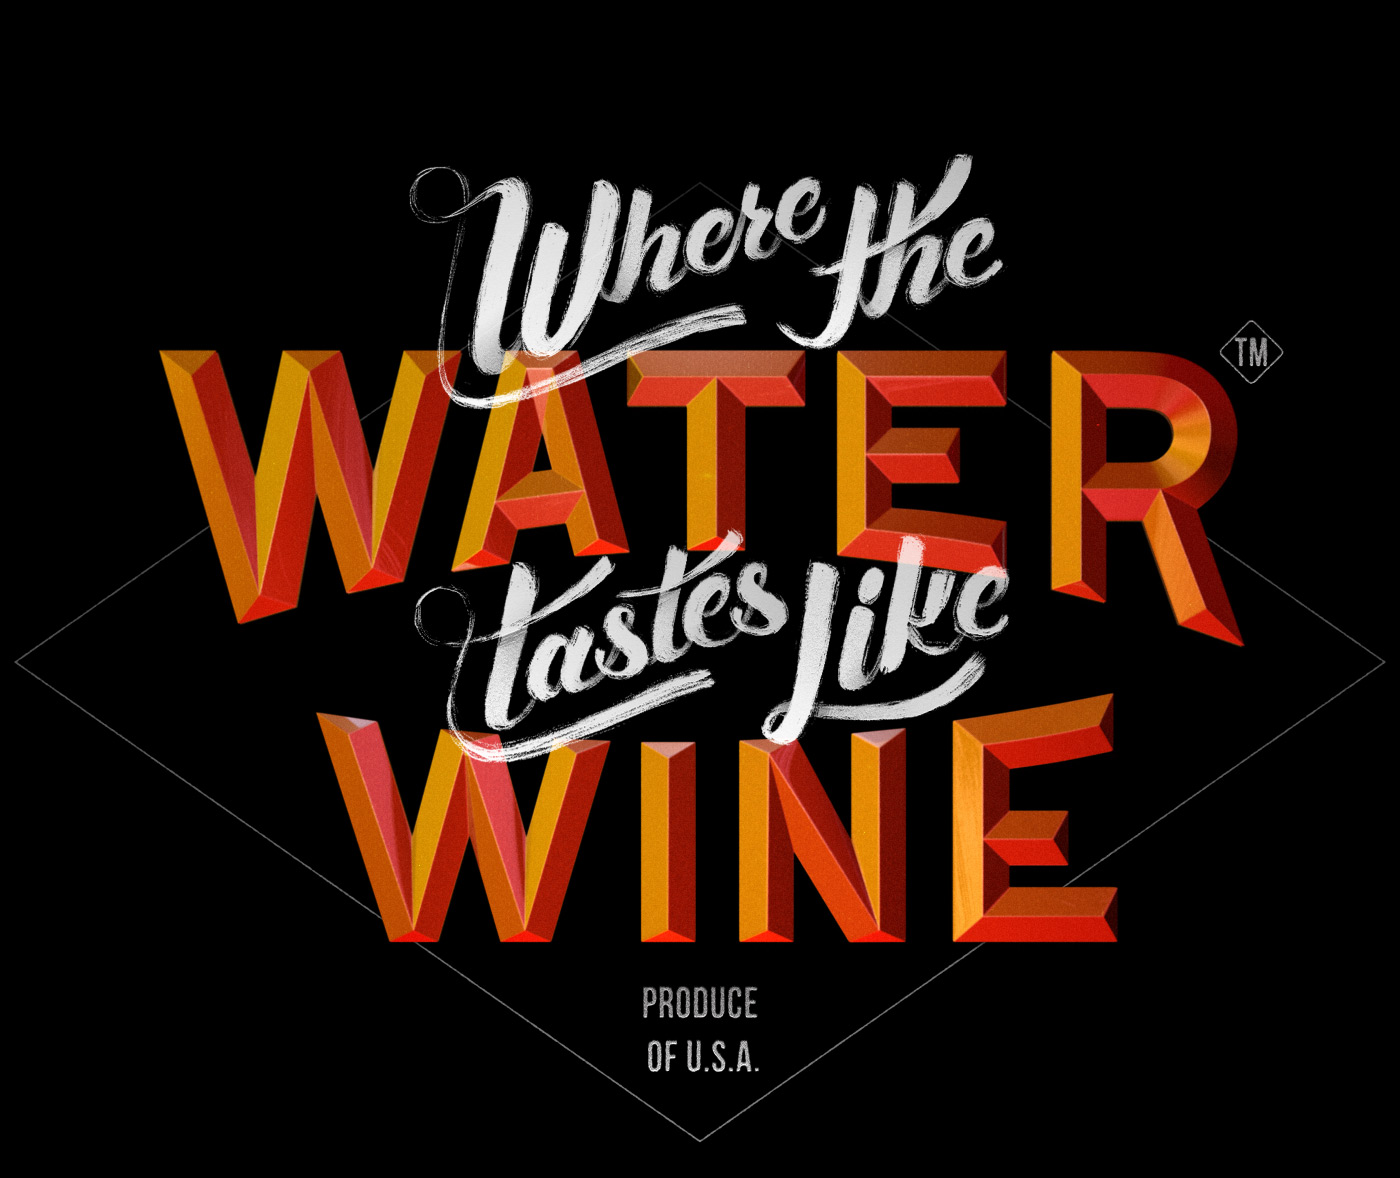 Water like wine. Where the Water tastes like Wine. Where is the Water tastes like Wine. Where the Water tastes игра. Where the Waters tastes like Wine DS,hfnm zpsr.